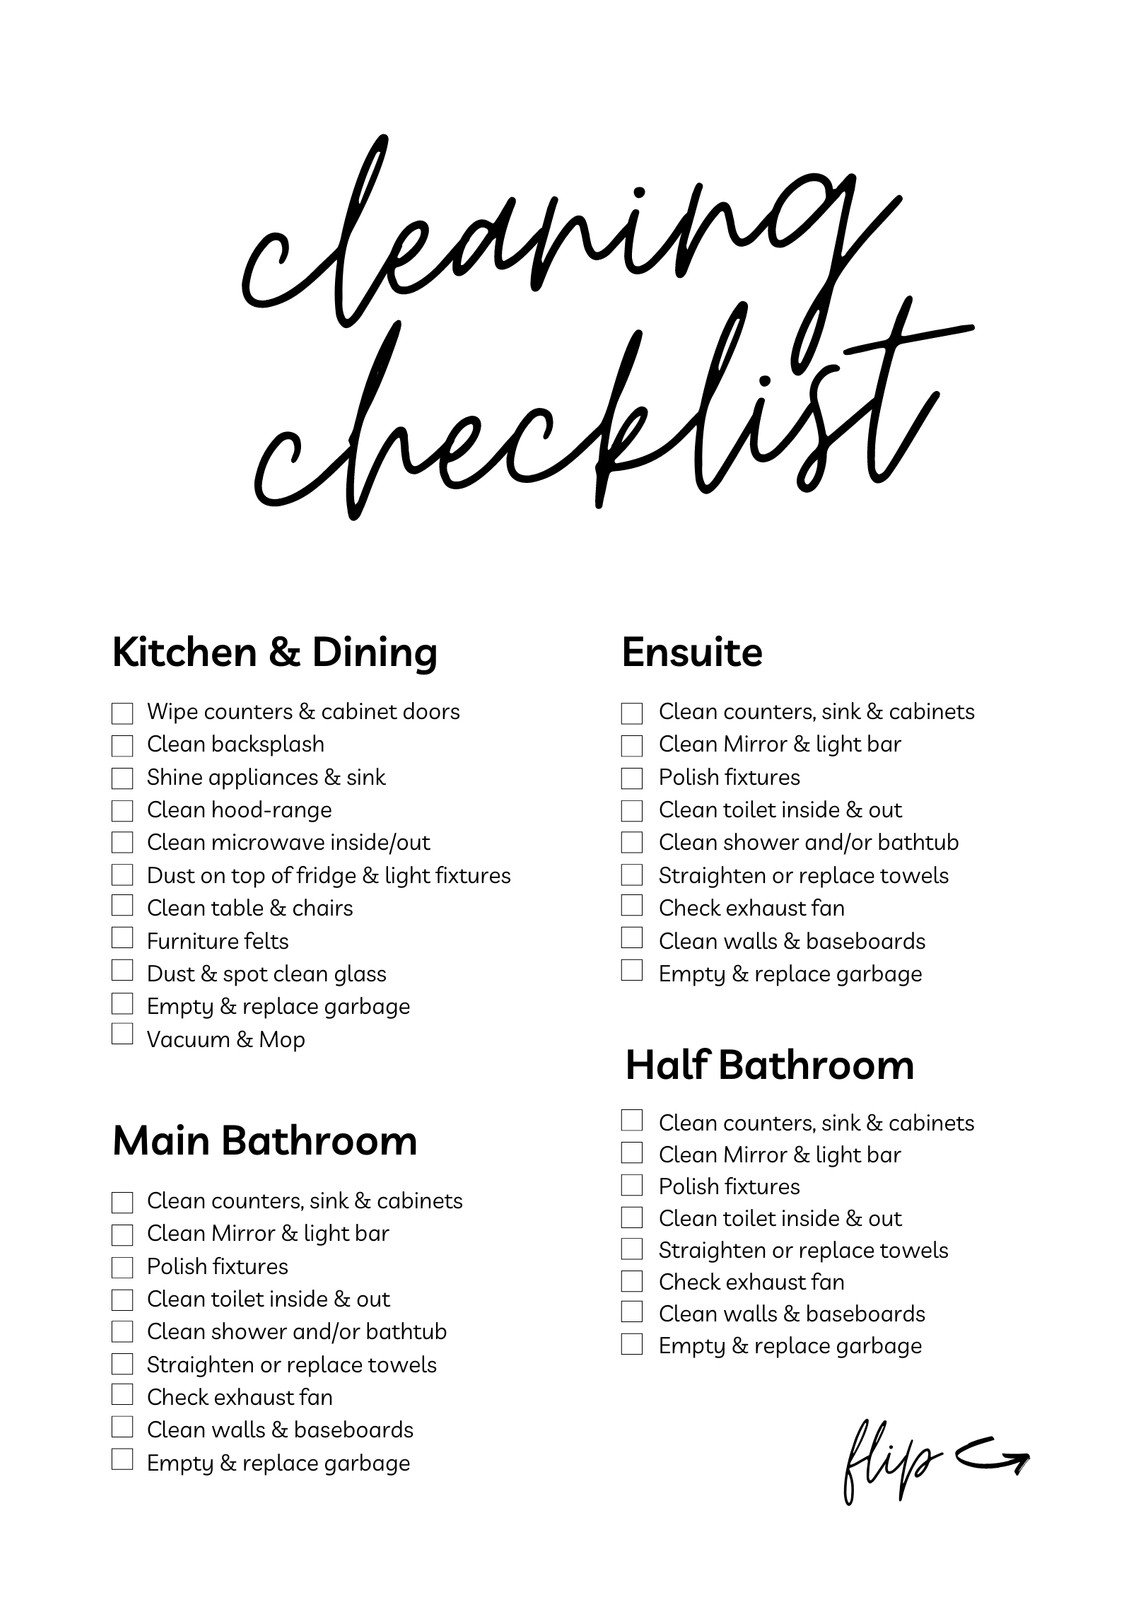 car cleaning maintenance checklist